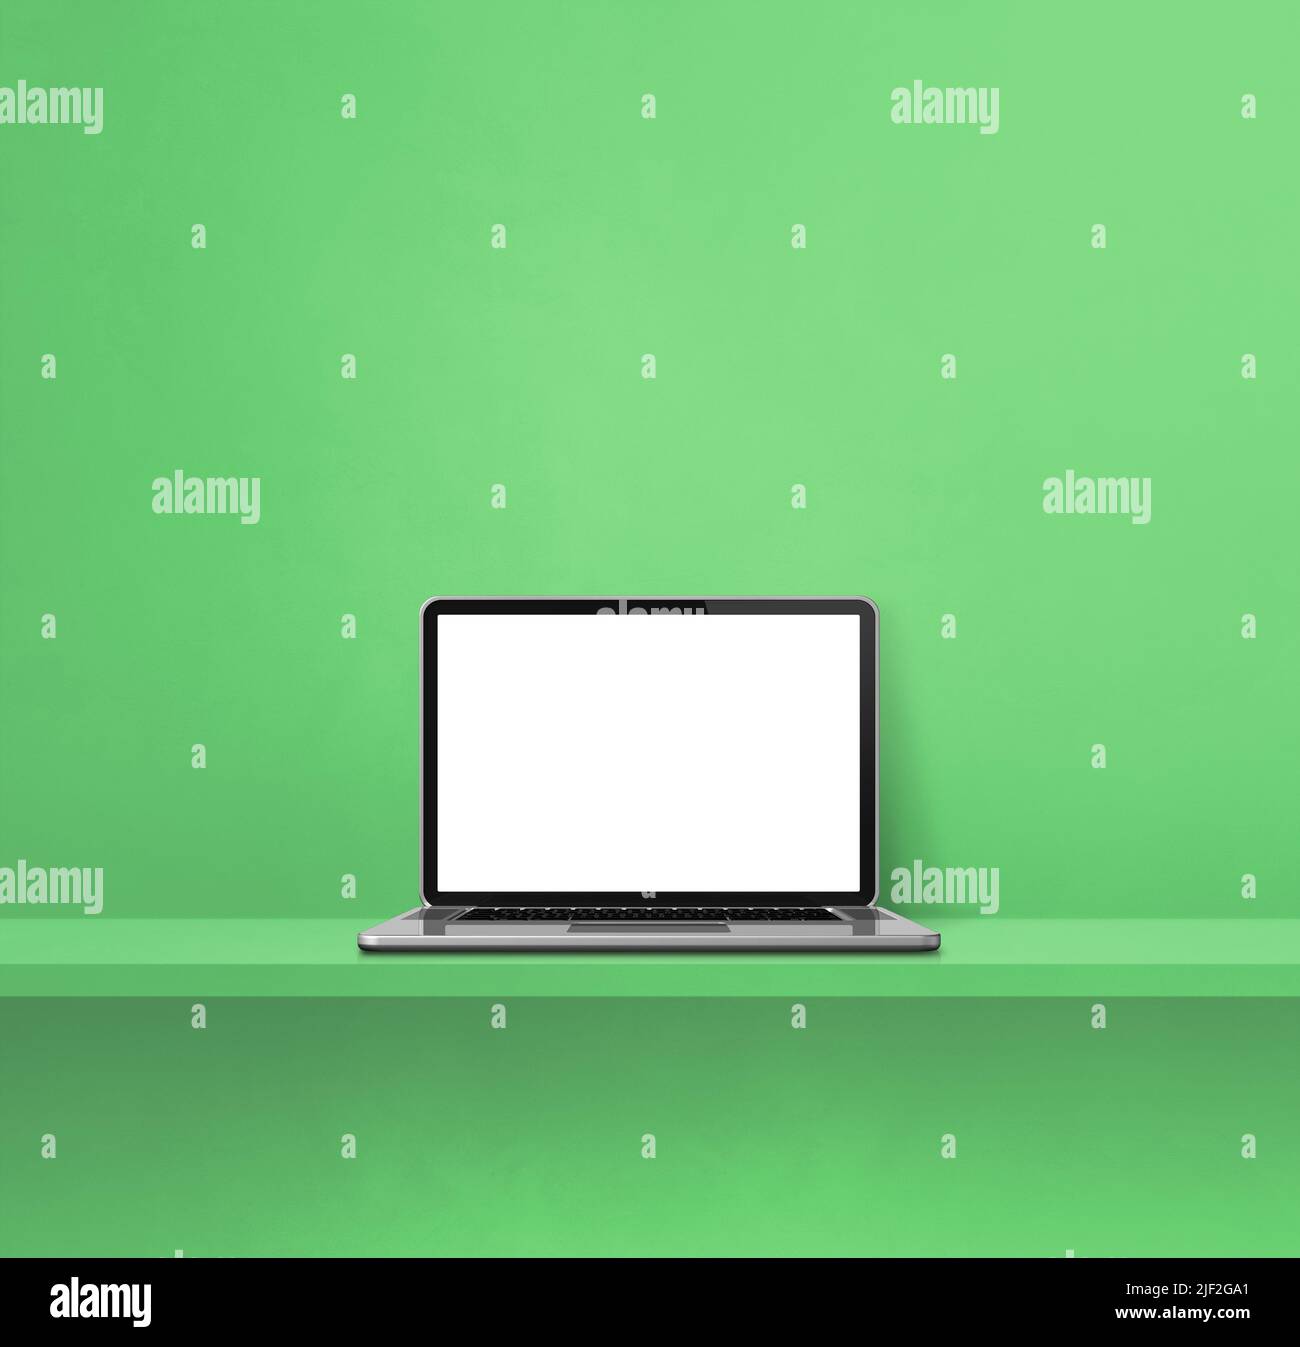 Laptop computer on green shelf. Square background. 3D Illustration Stock Photo